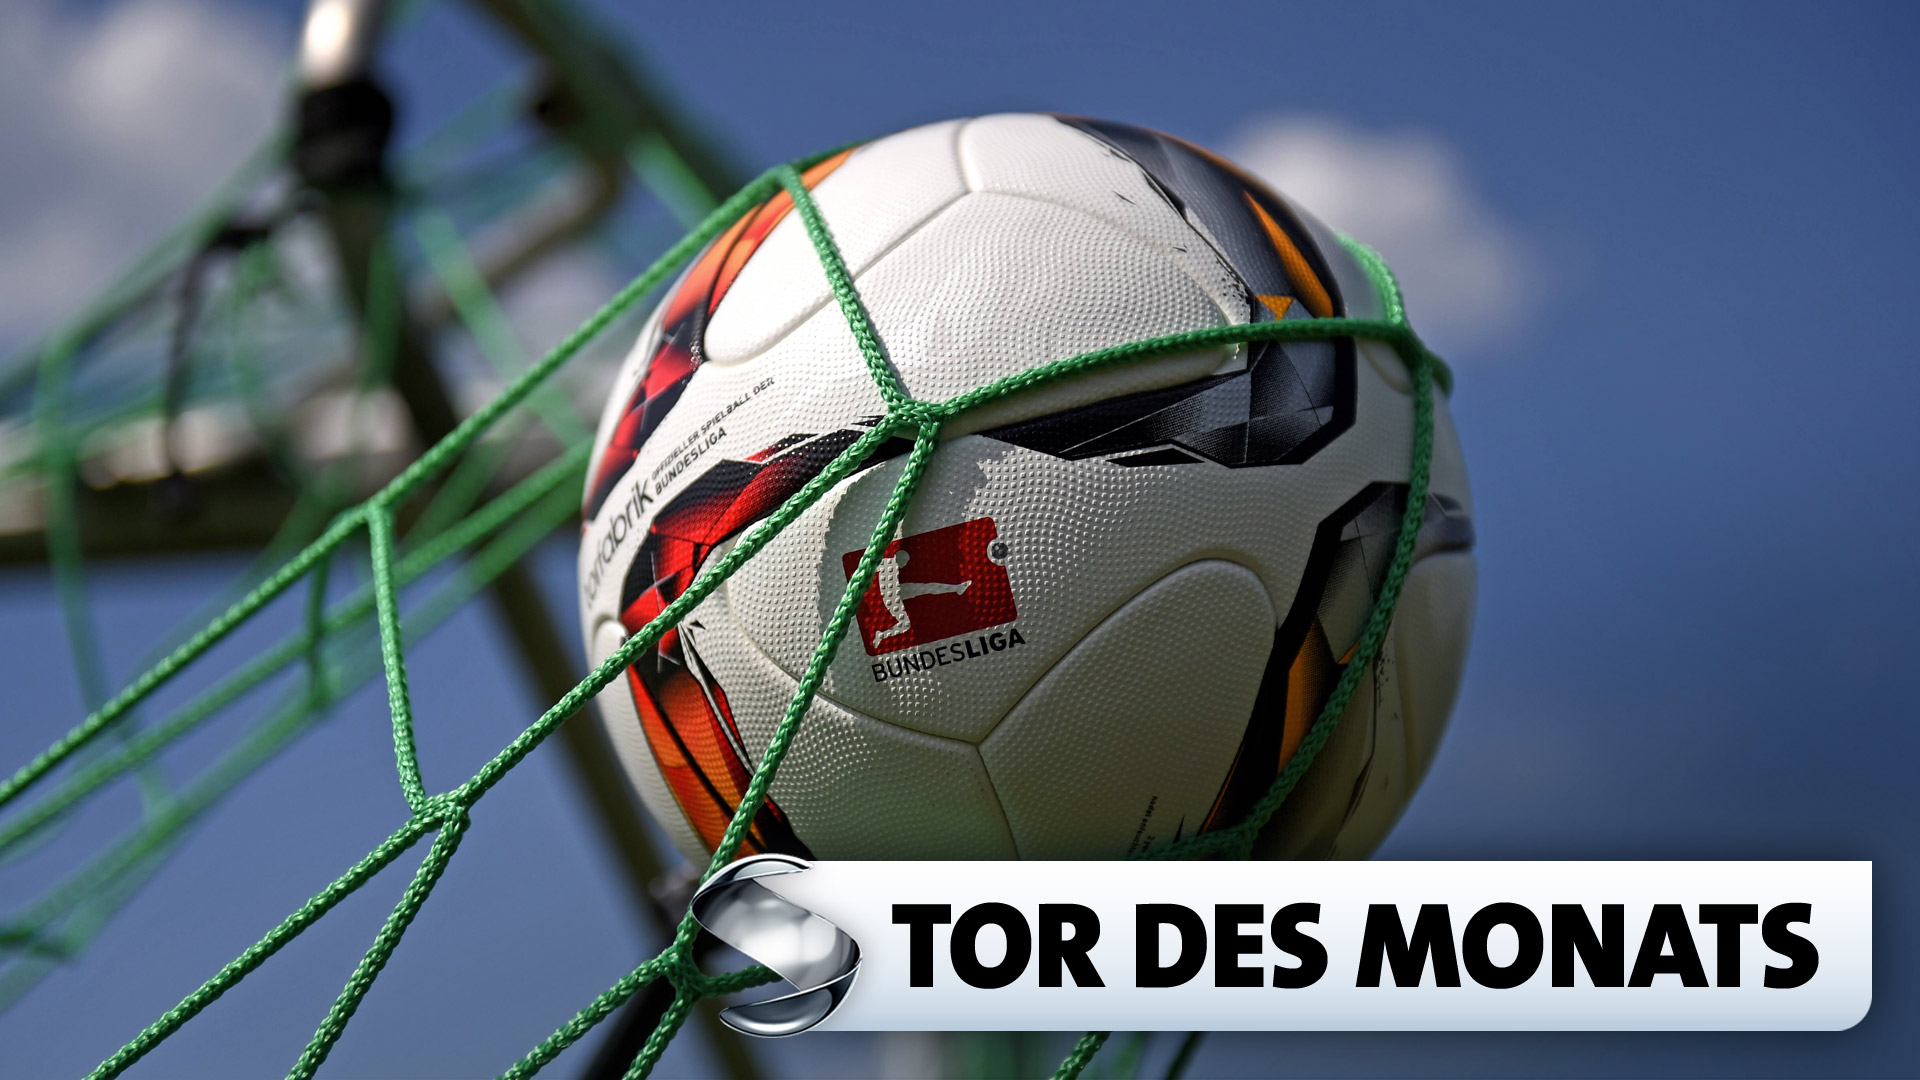 Tor Des Monats Sportschau